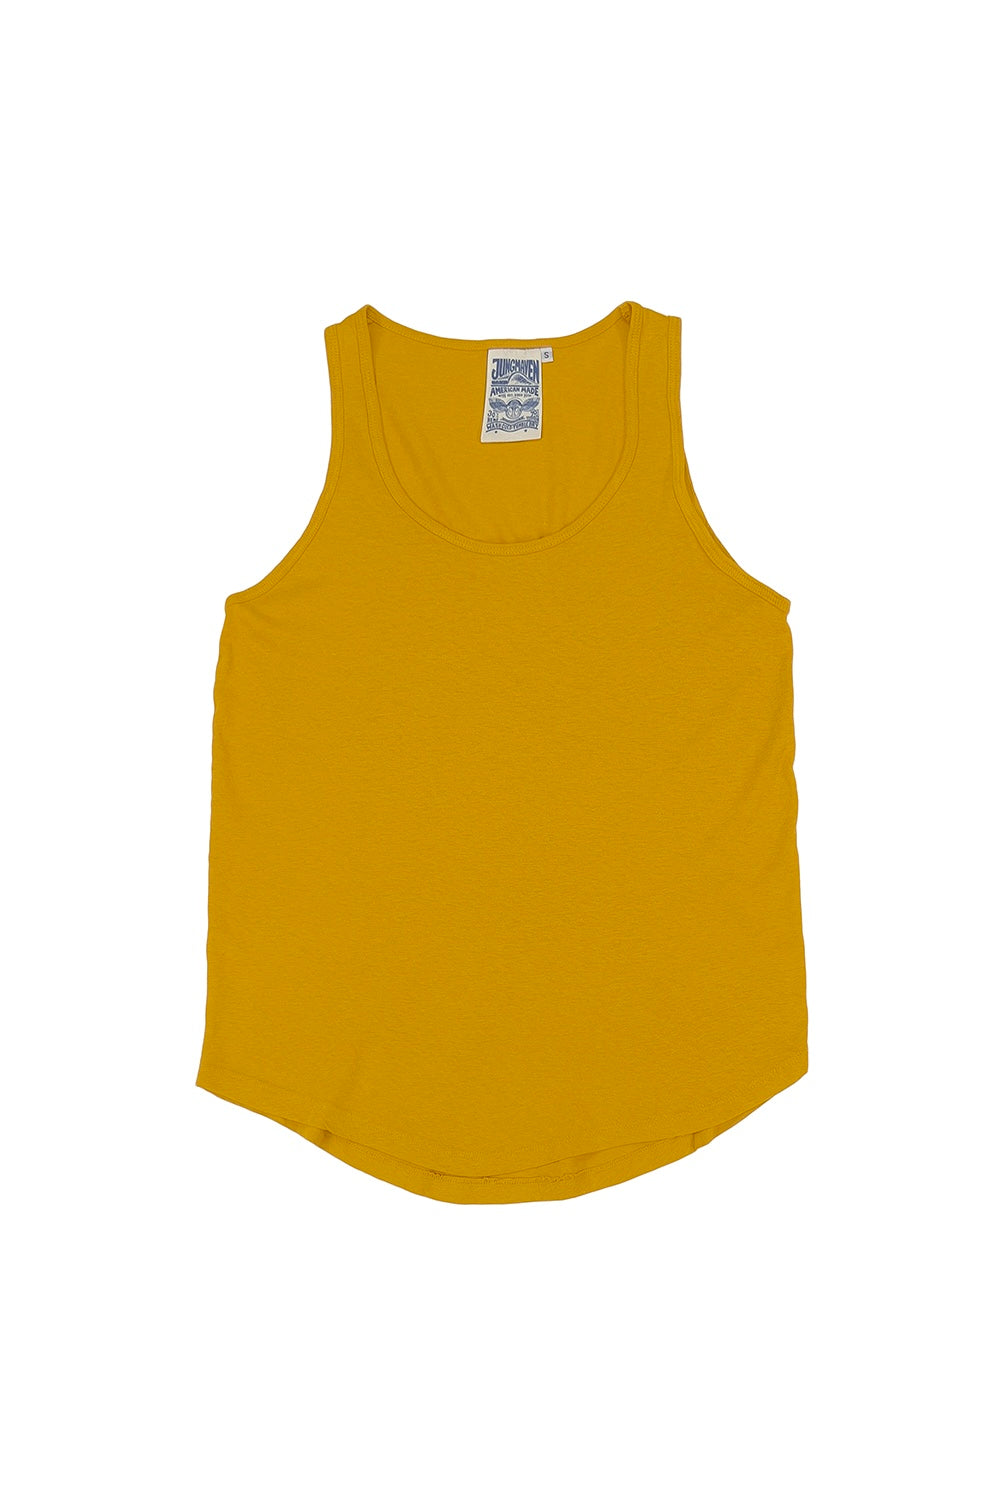 Truro Tank Top | Jungmaven Hemp Clothing & Accessories / Color: Spicy Mustard